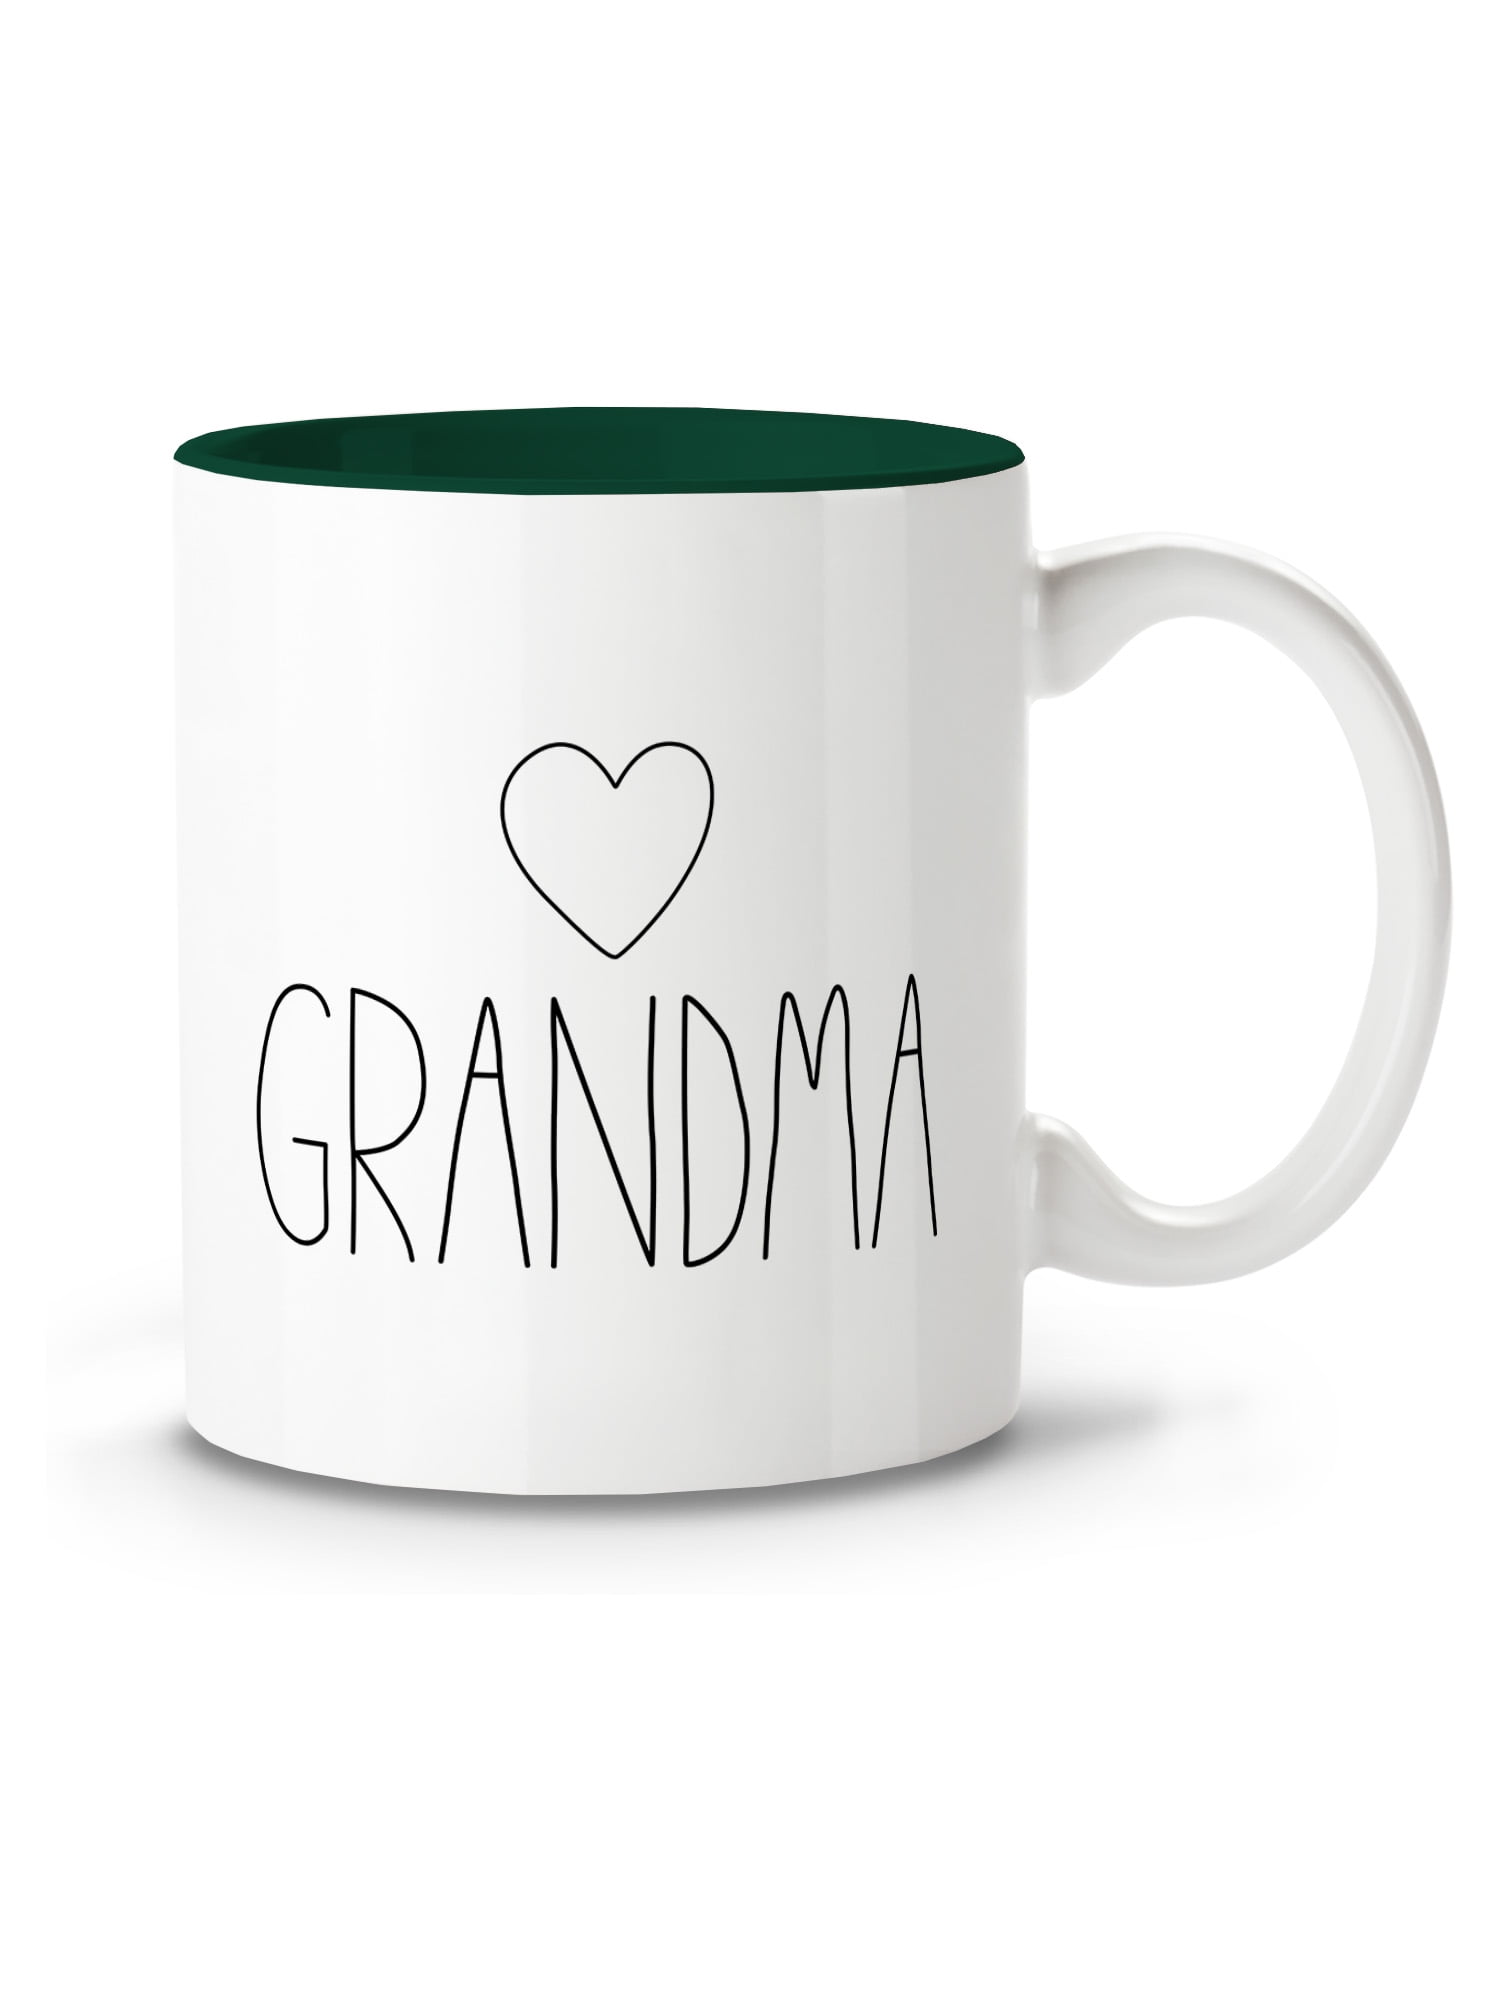 Best Nana Mug - Coffee Mug For Grandma - Best Grandmother Present Ceramic  Tea Cup 11oz Nana Christmas B Day Gifts - Green Interior 